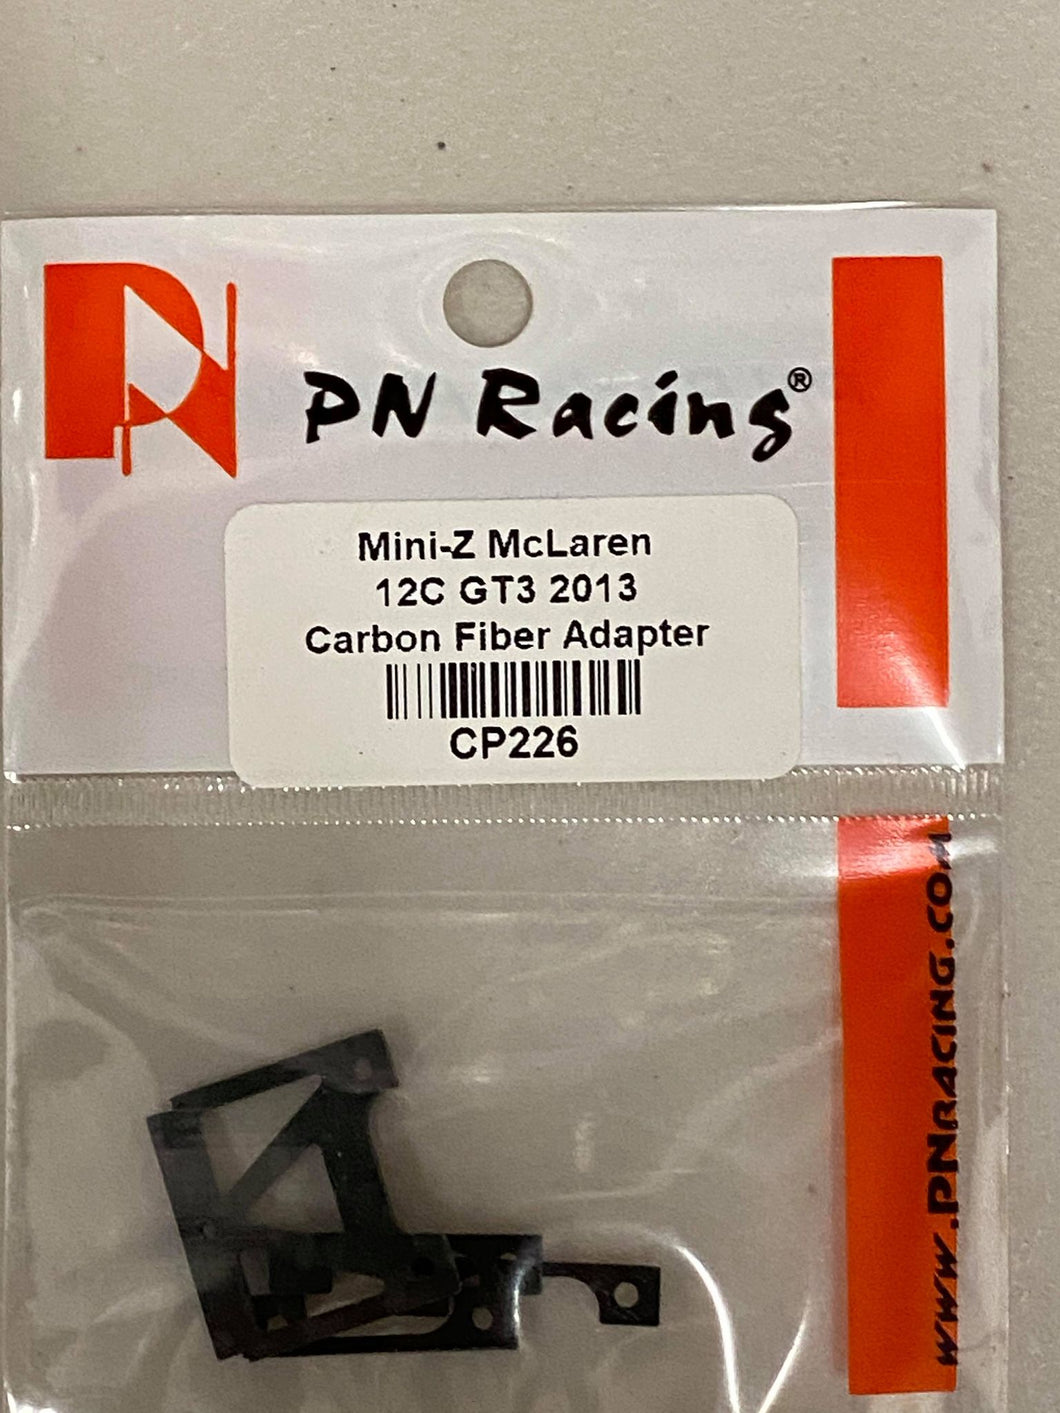 CP226 PN Racing Mini-Z McLaren 12C GT3 2013 Carbon Fiber Adapter